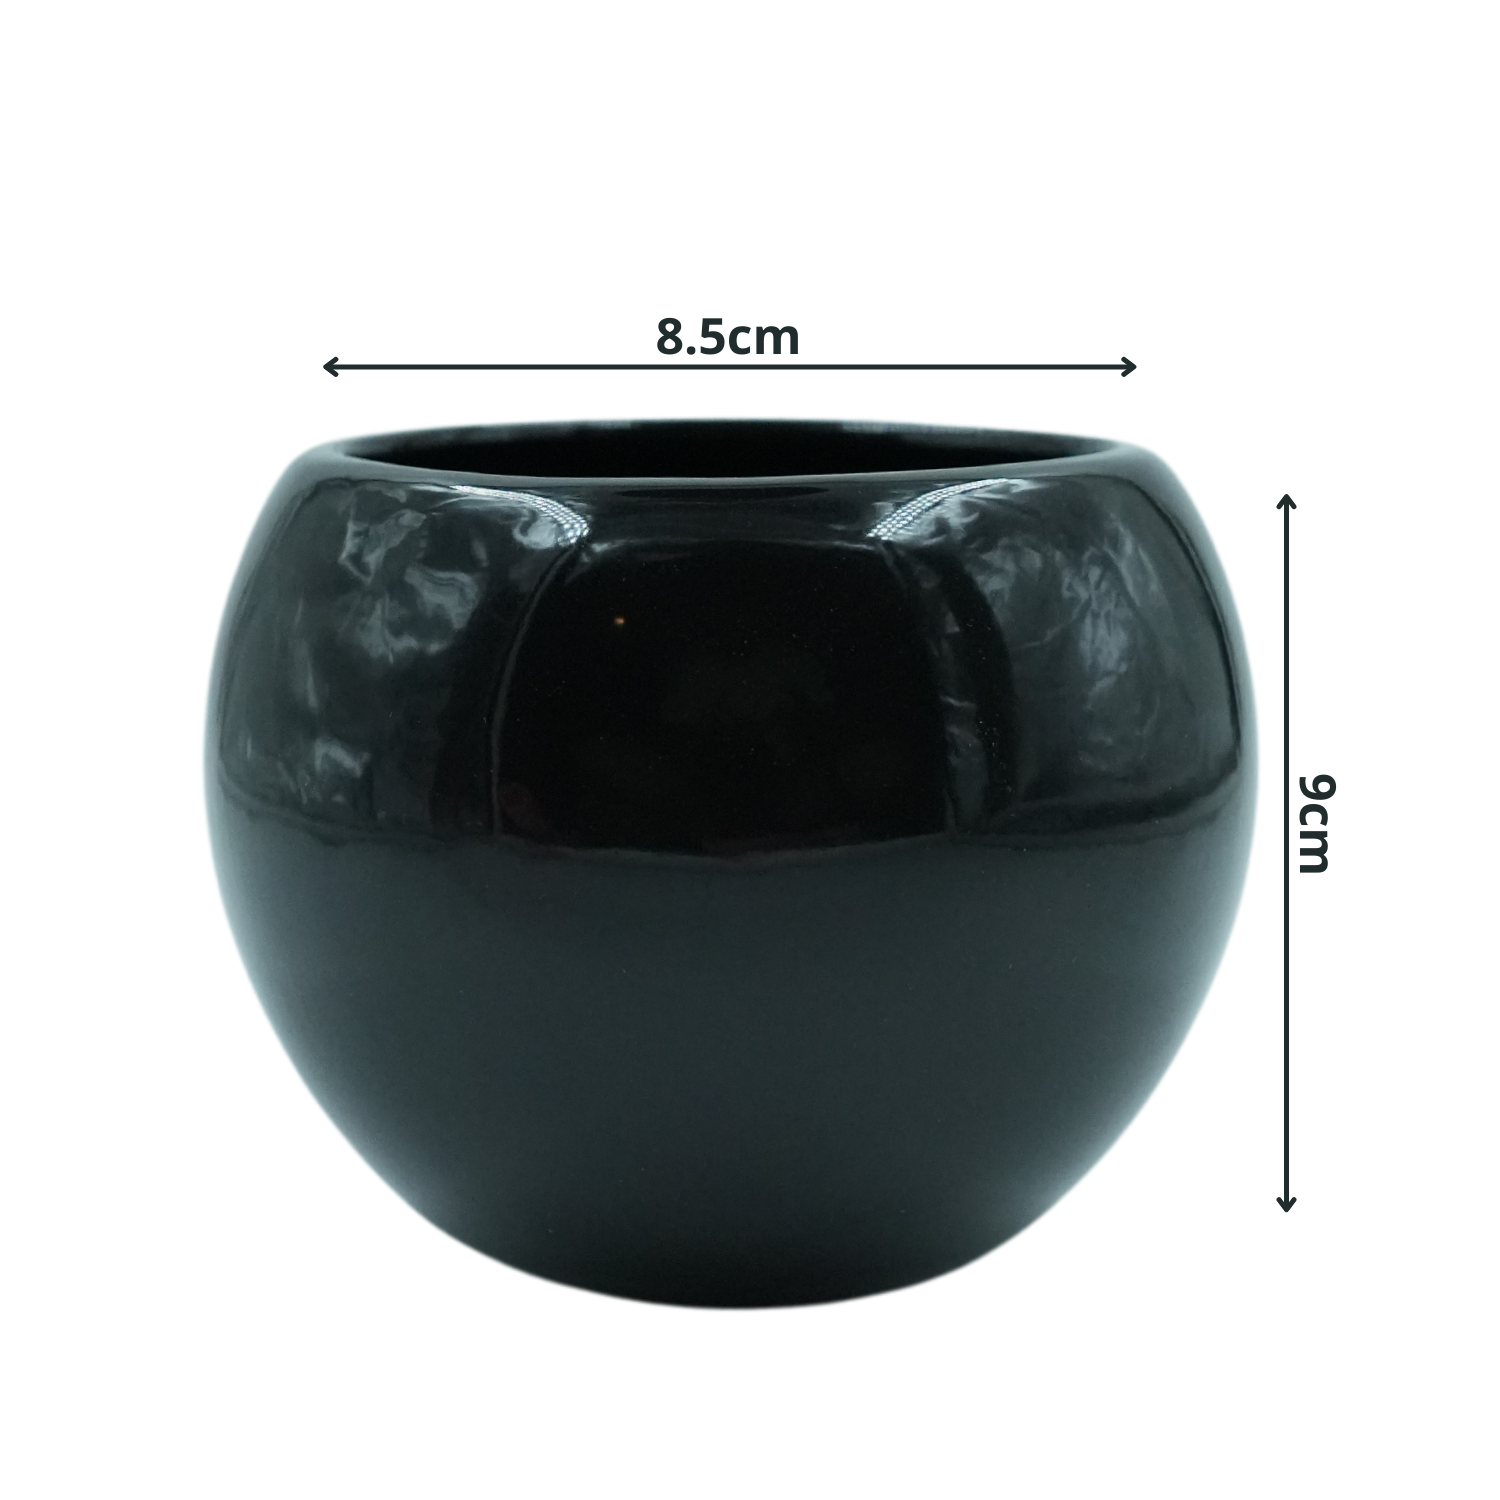 Designer Ceramic Pot (Black, Glossy Finish,Small) for Home & Indoor Plant Decor